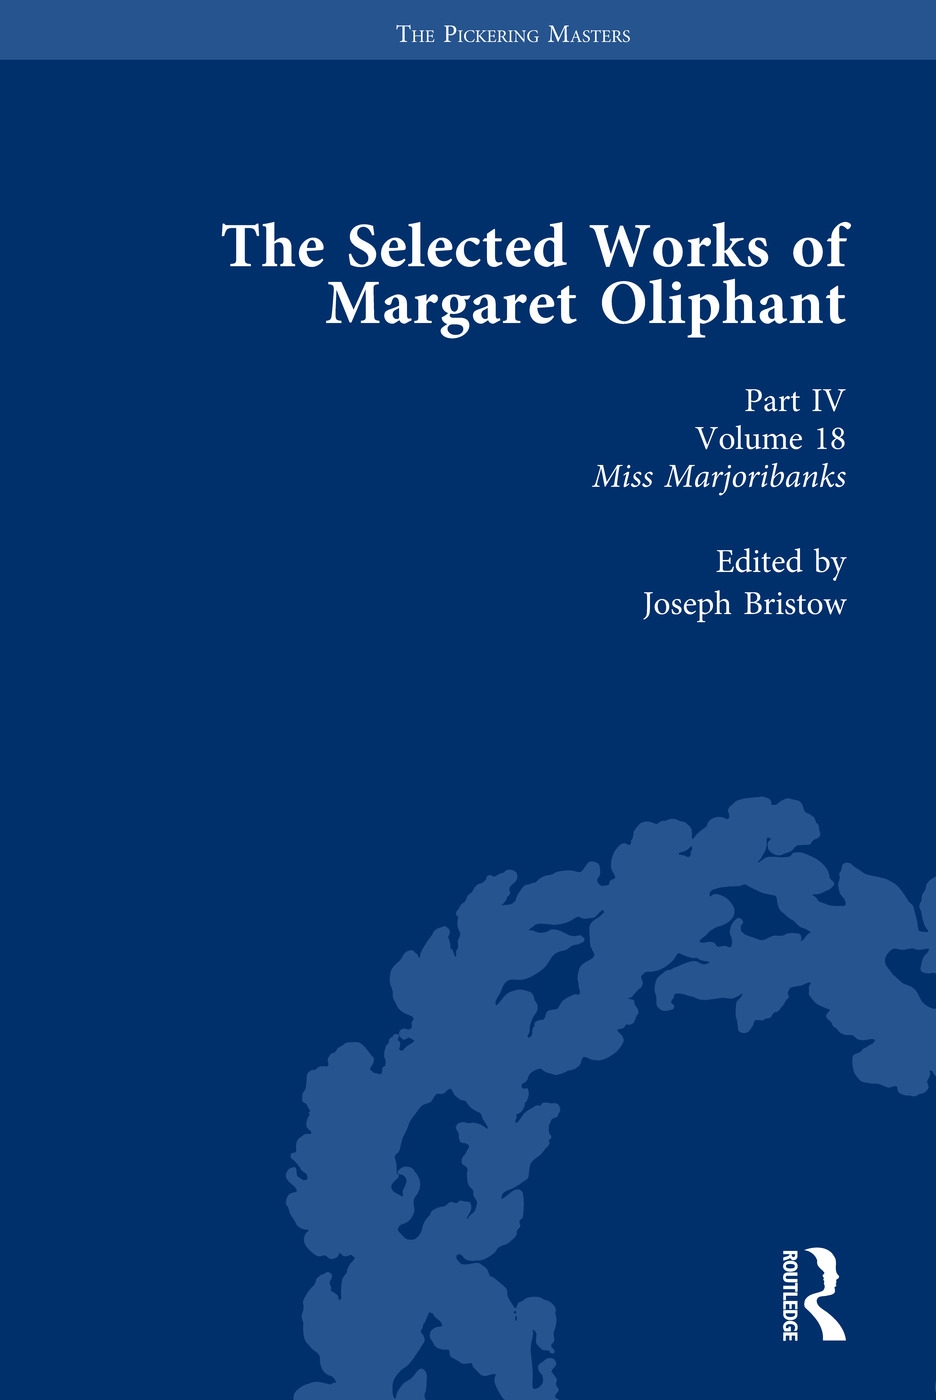 The Selected Works of Margaret Oliphant, Part IV Volume 18: Miss Marjoribanks